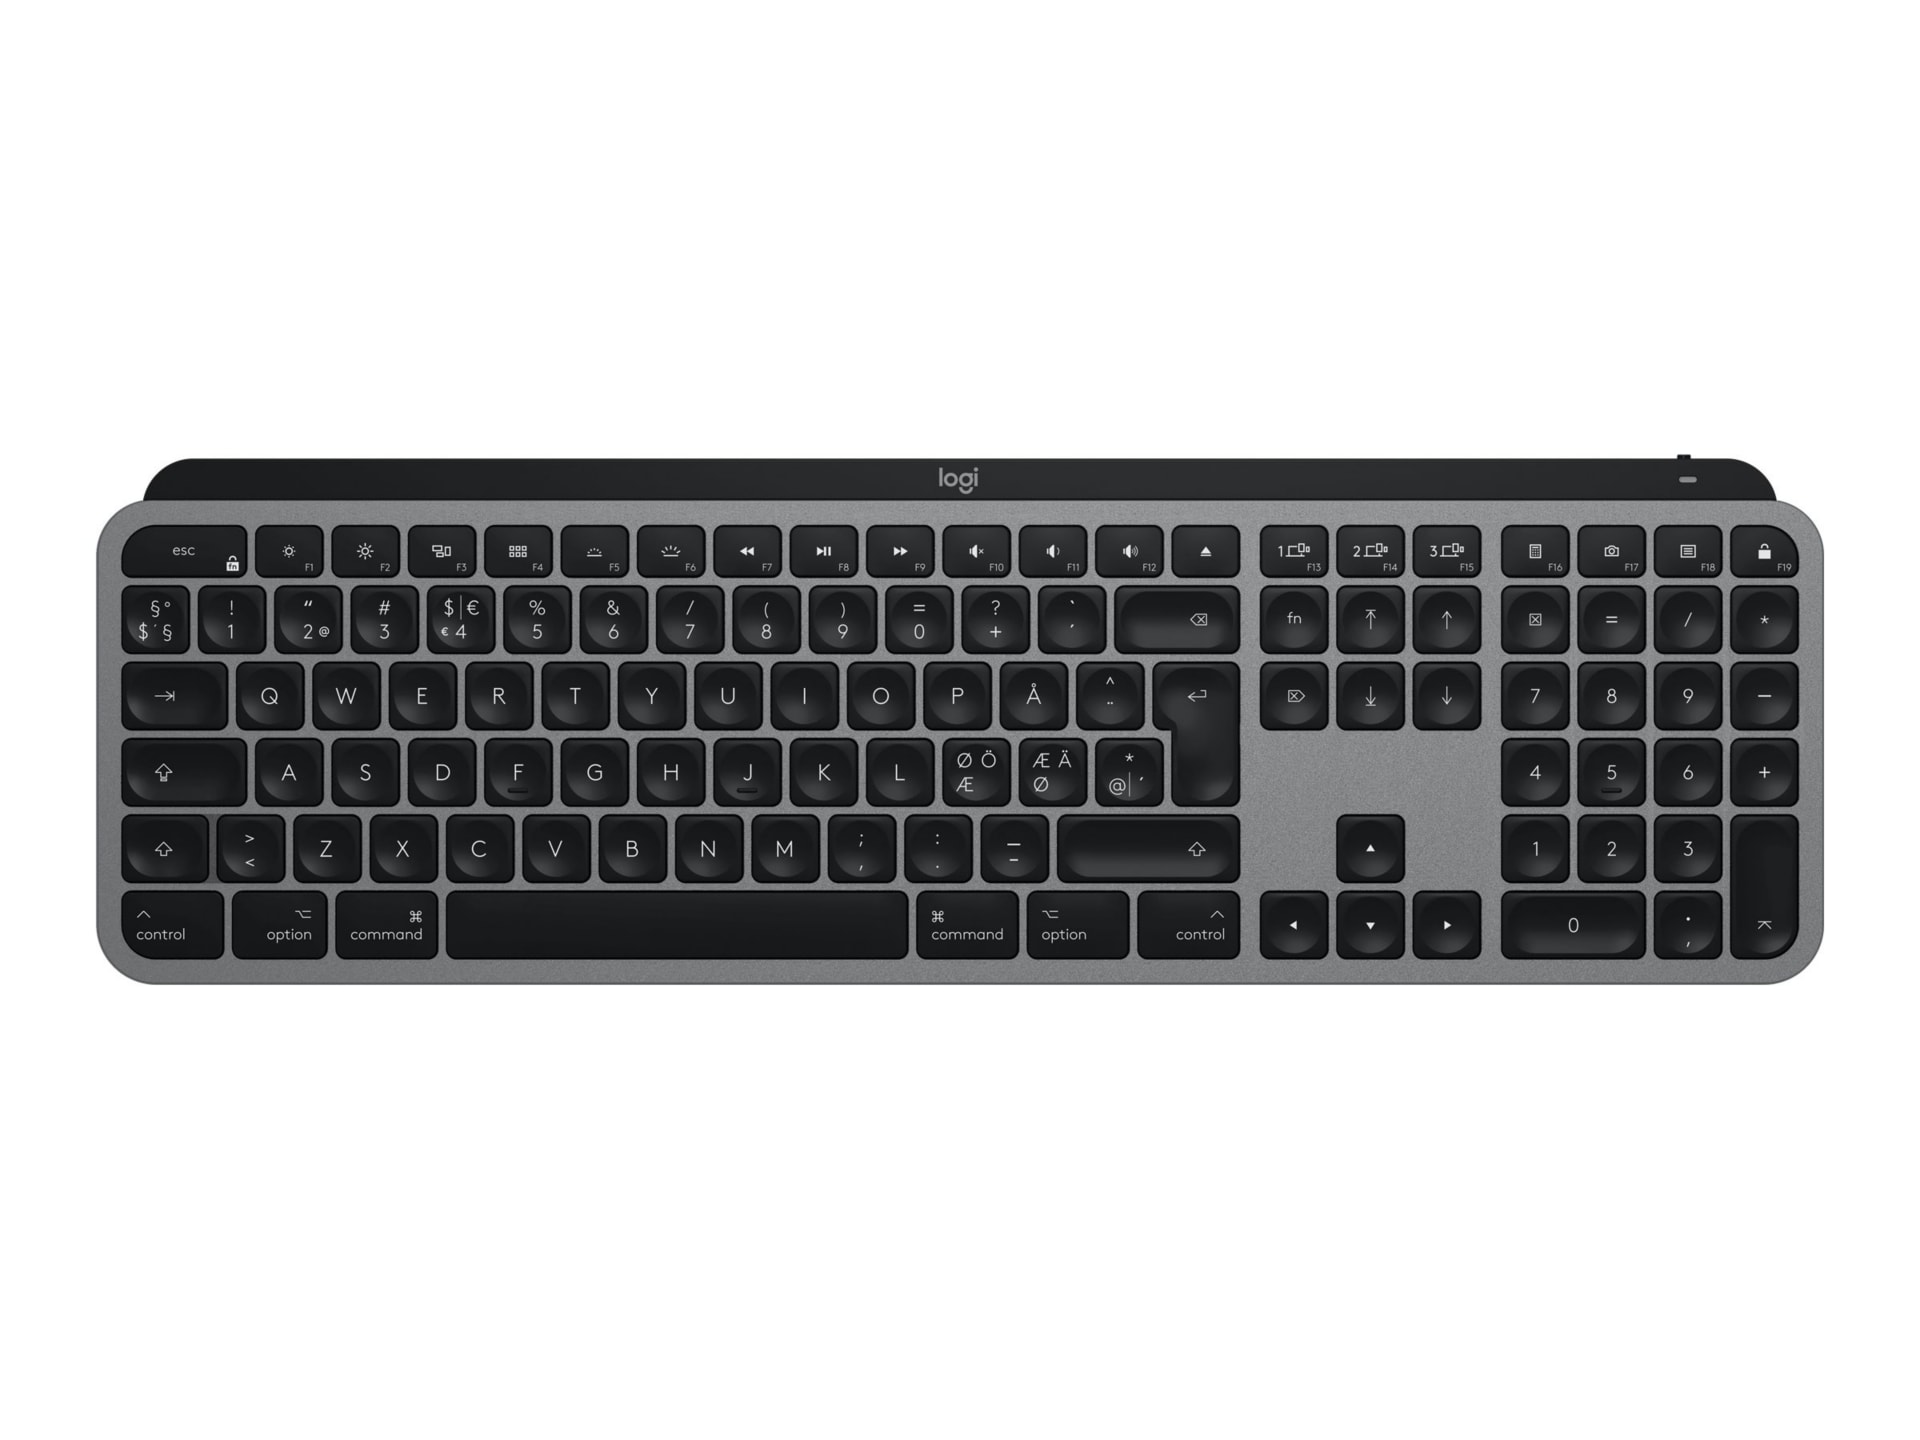 Logitech Keys Advanced Wireless Illuminated Keyboard for Mac - - space gray - 920-009552 - Keyboards CDW.com